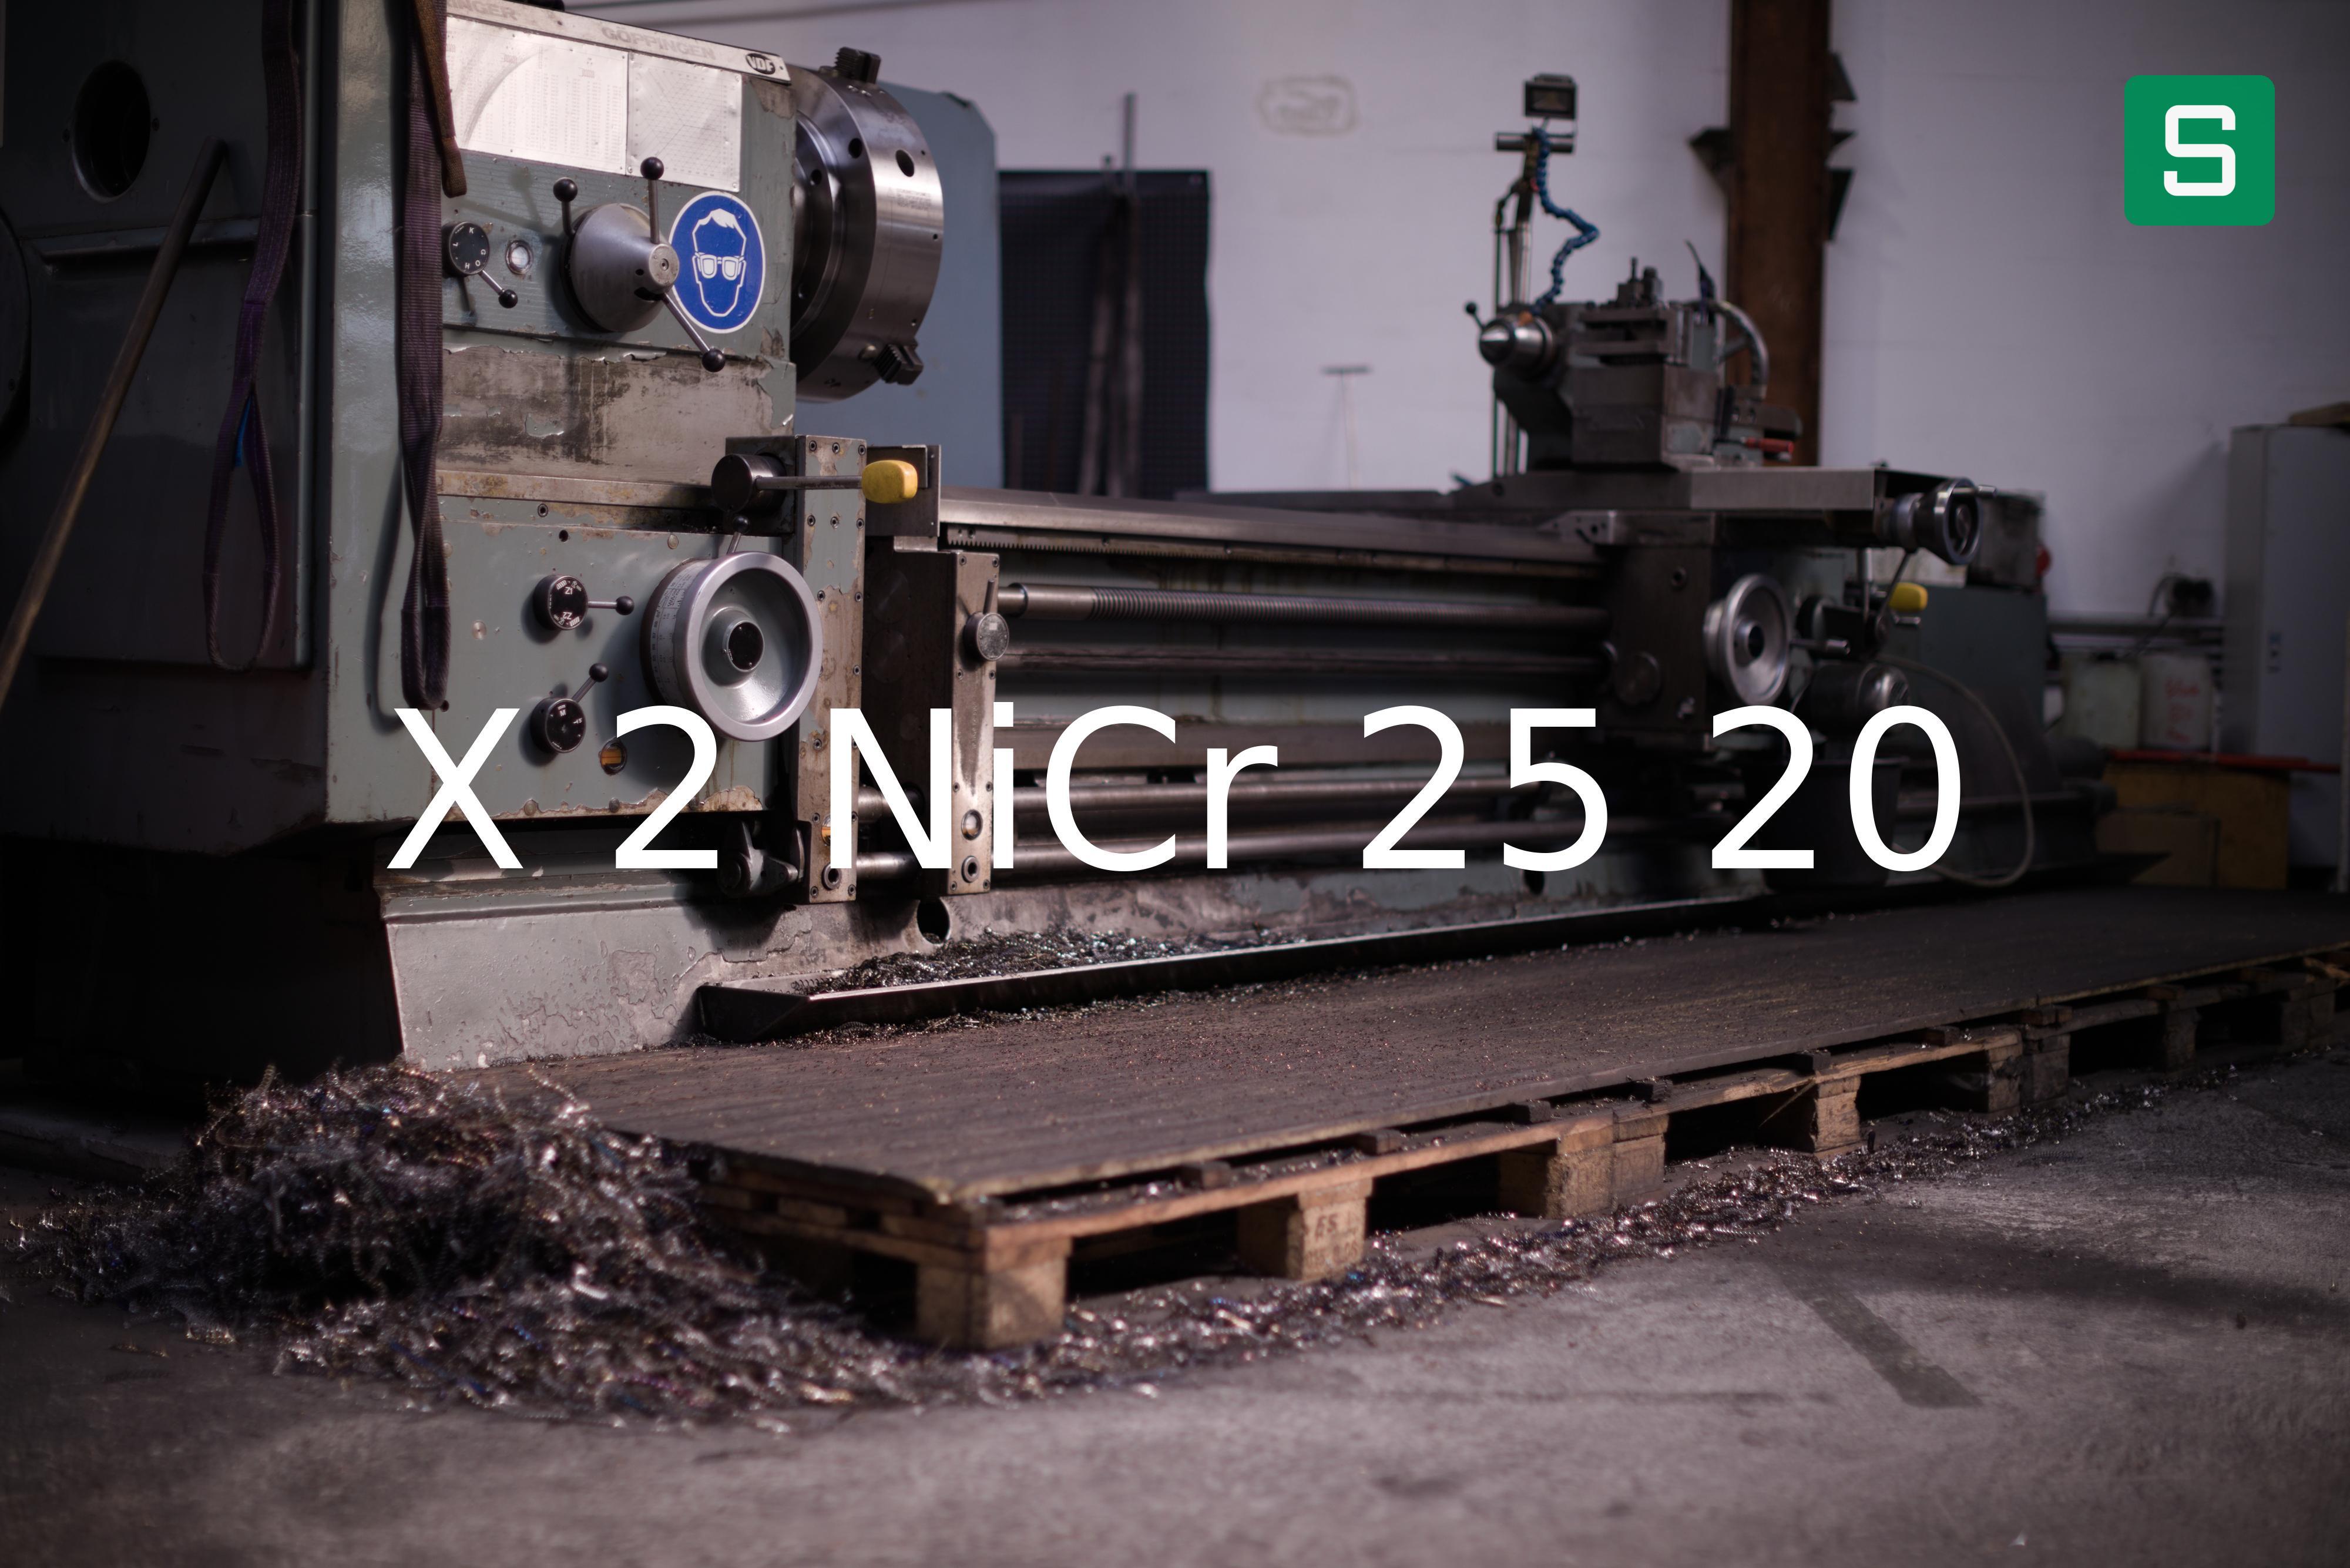 Steel Material: X 2 NiCr 25 20